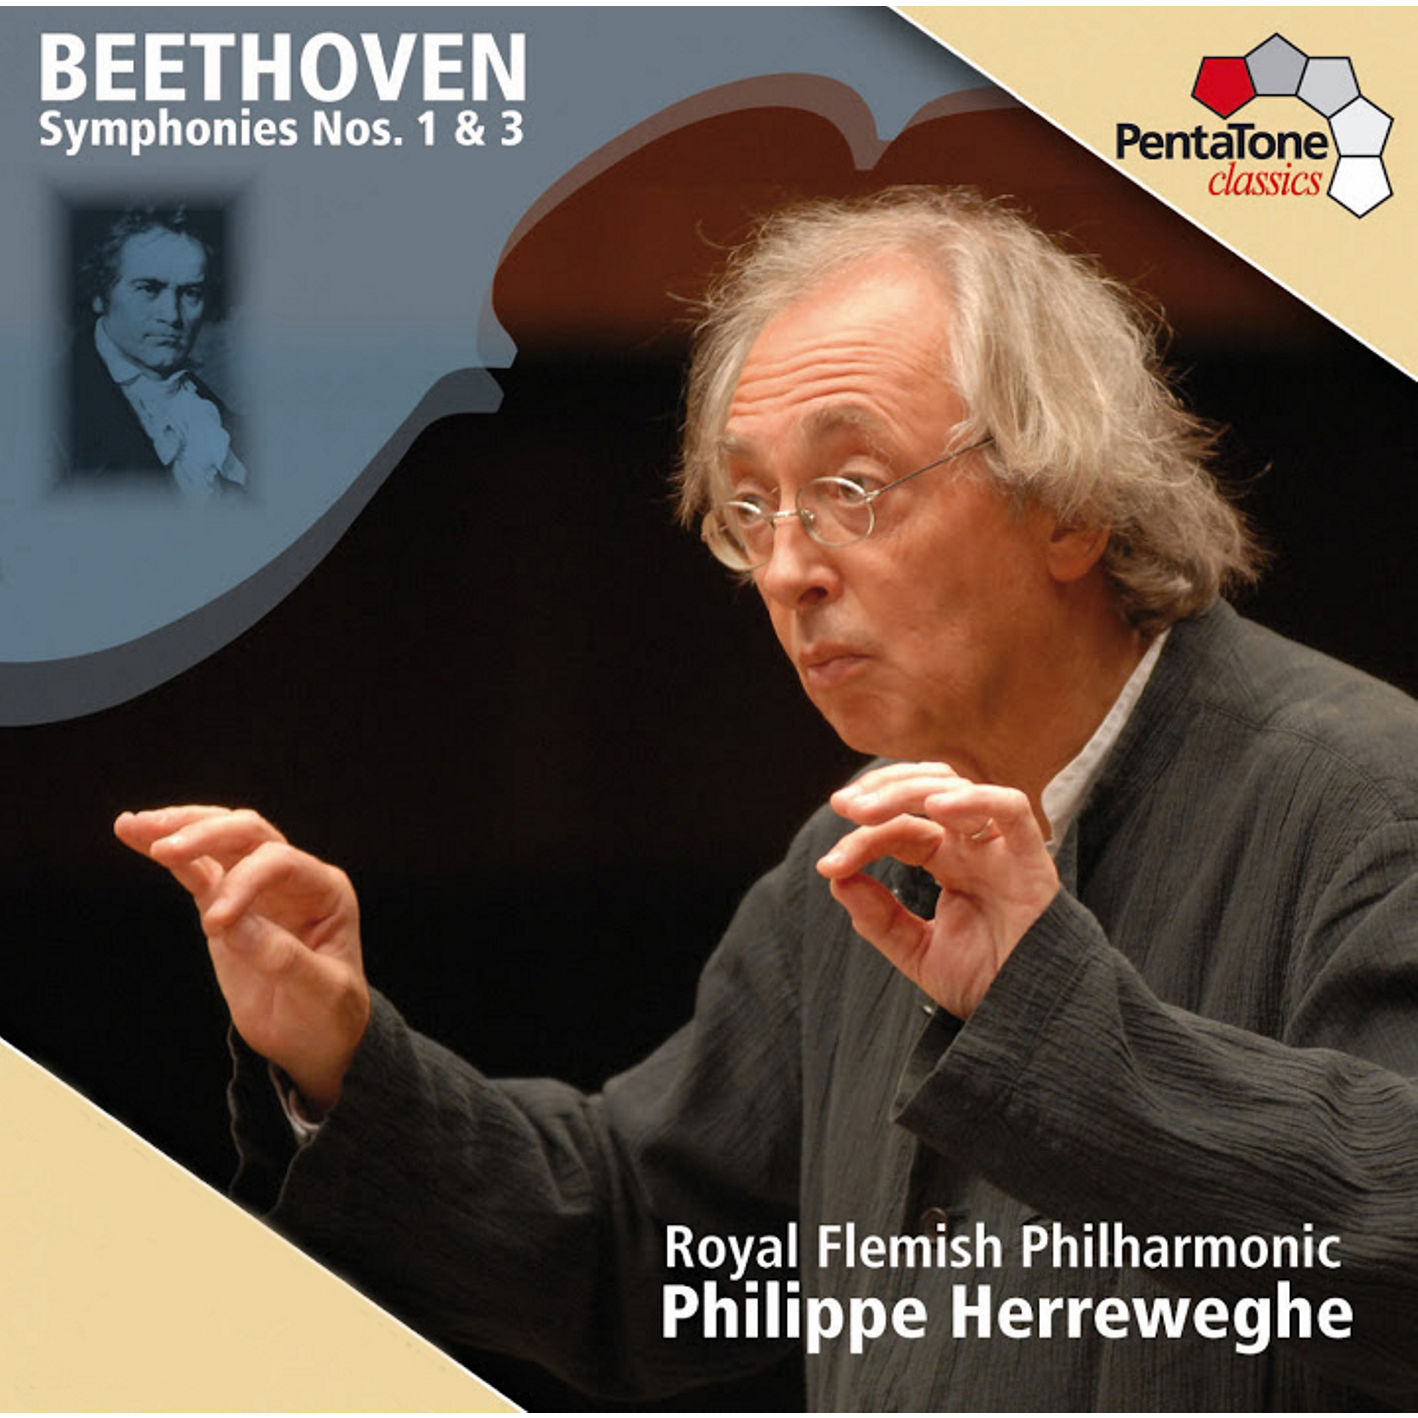 Royal Flemish Philharmonic Orchestra, Philippe Herreweghe - Beethoven Symphonies Nos. 1 & 3 (2013/2020) [FLAC 24bit/96kHz]